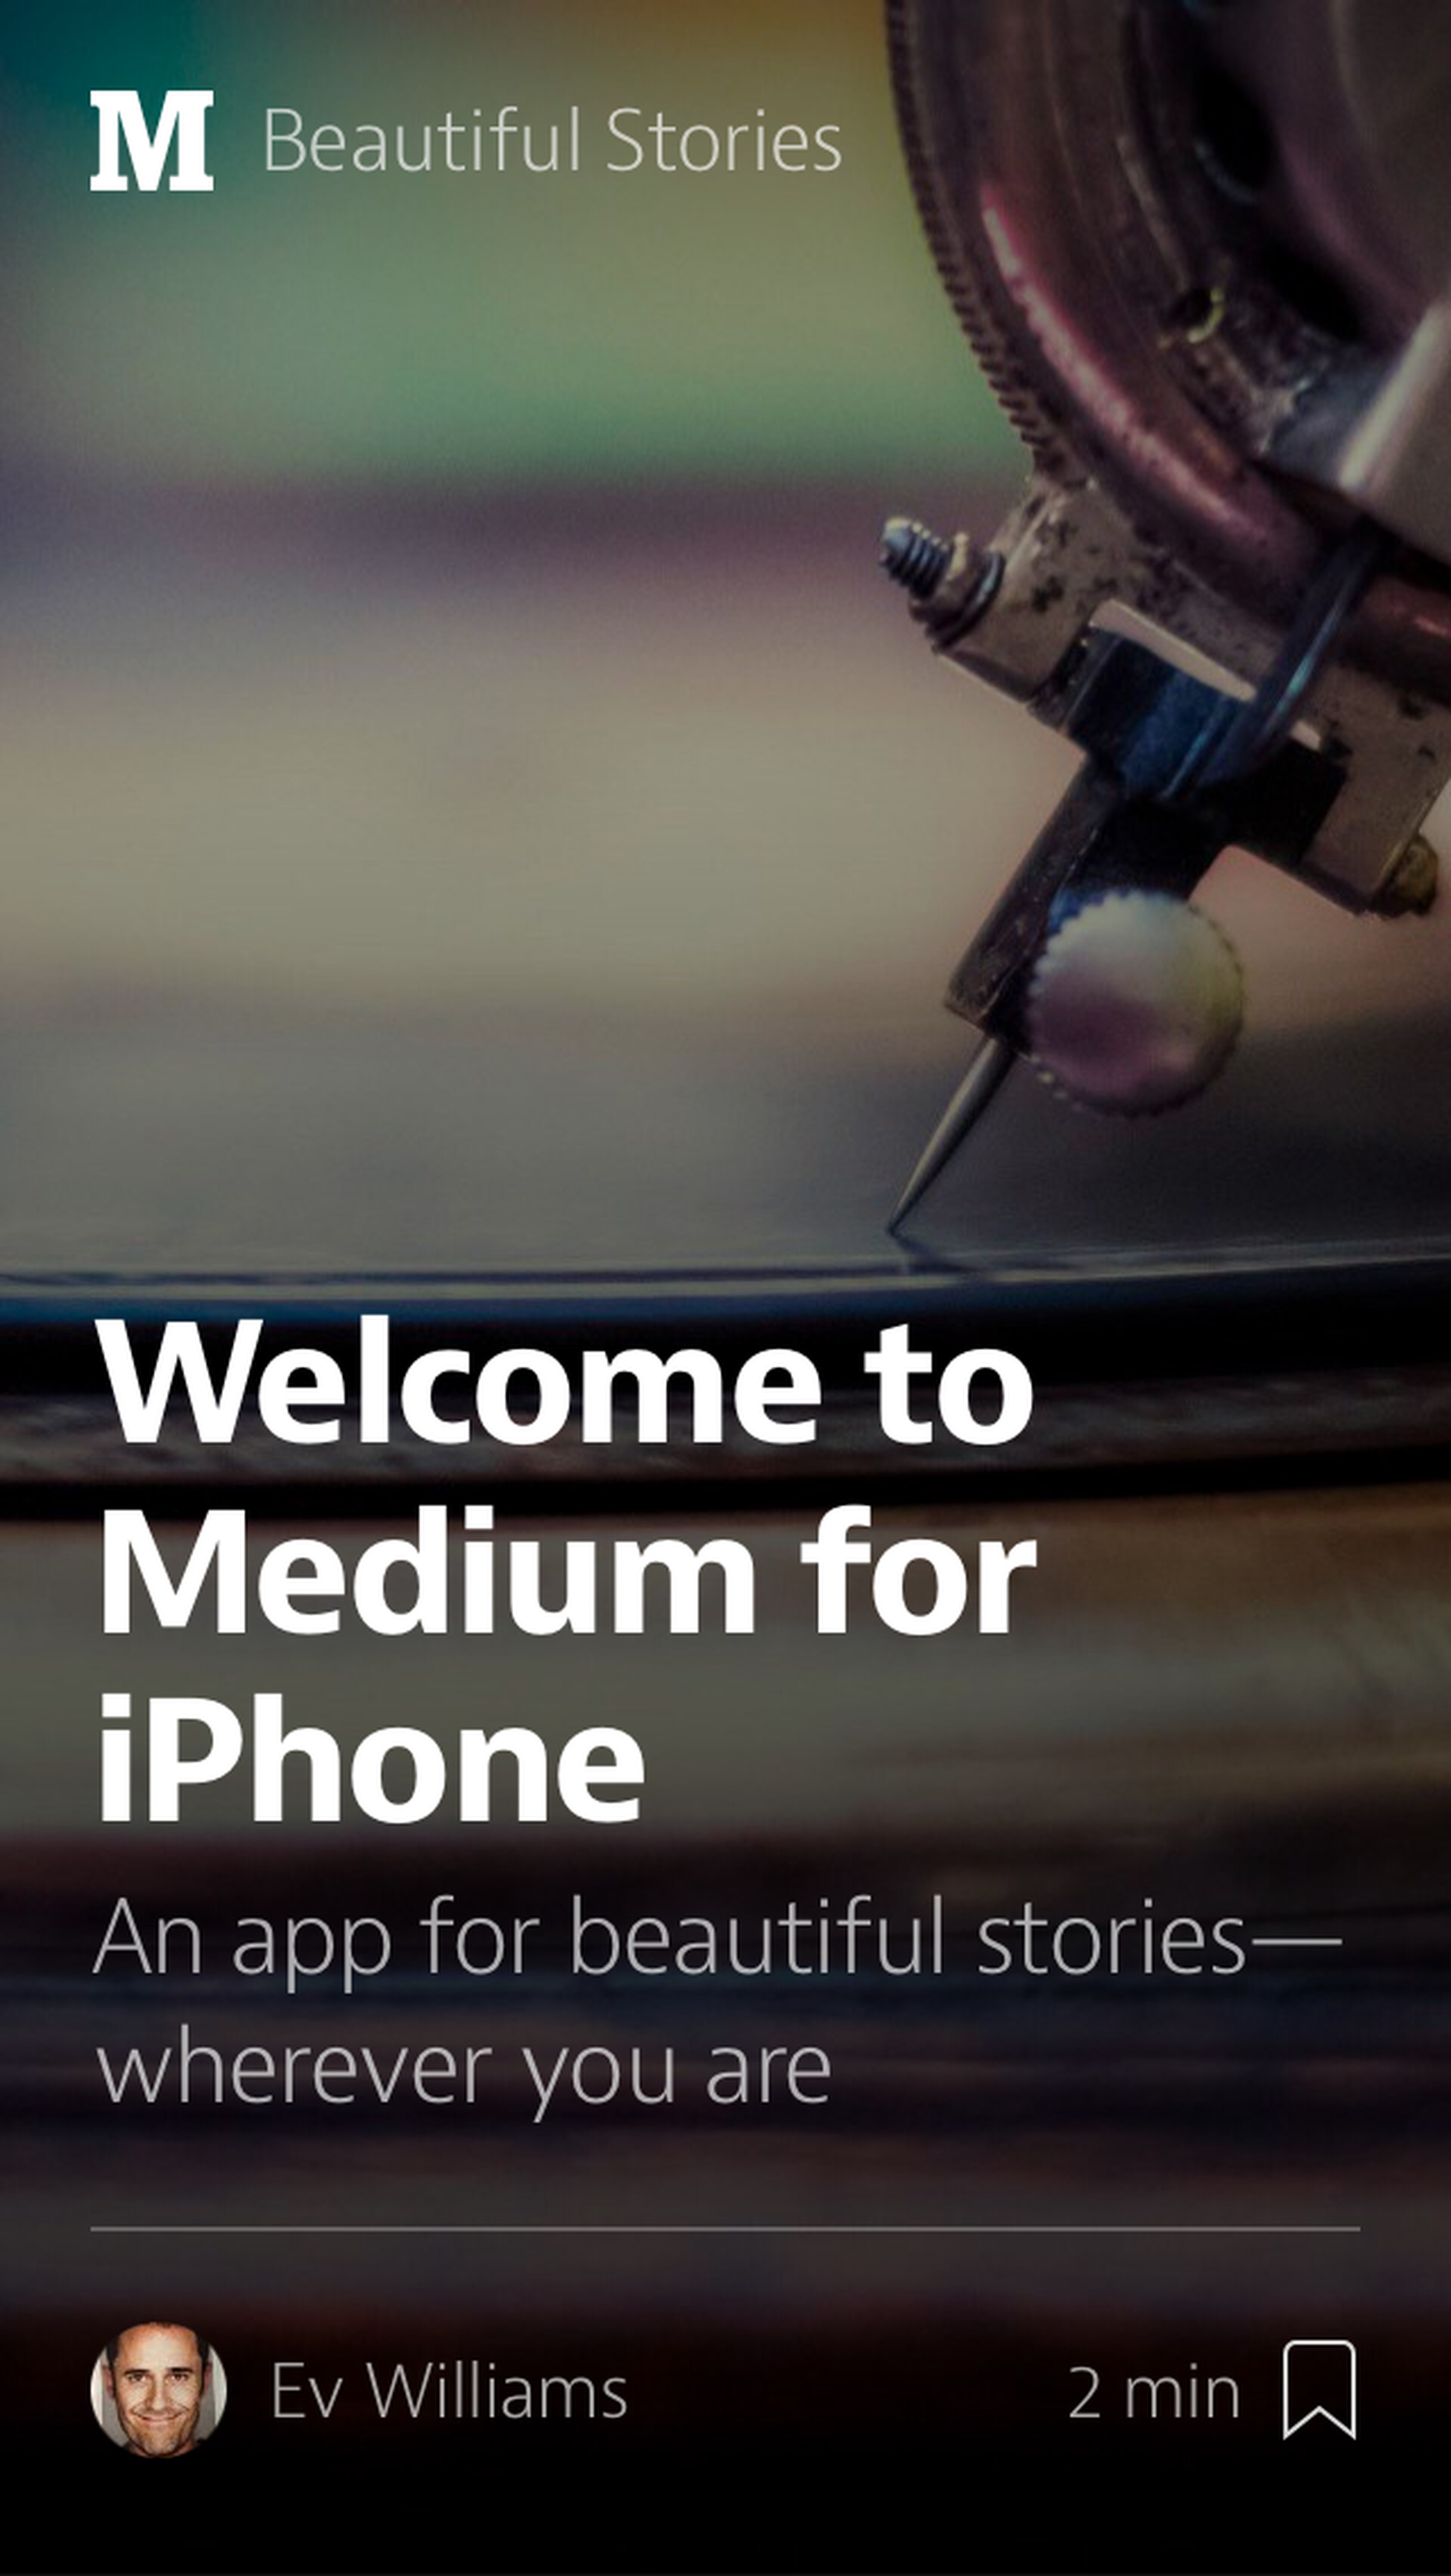 Medium for iPhone (screenshots)